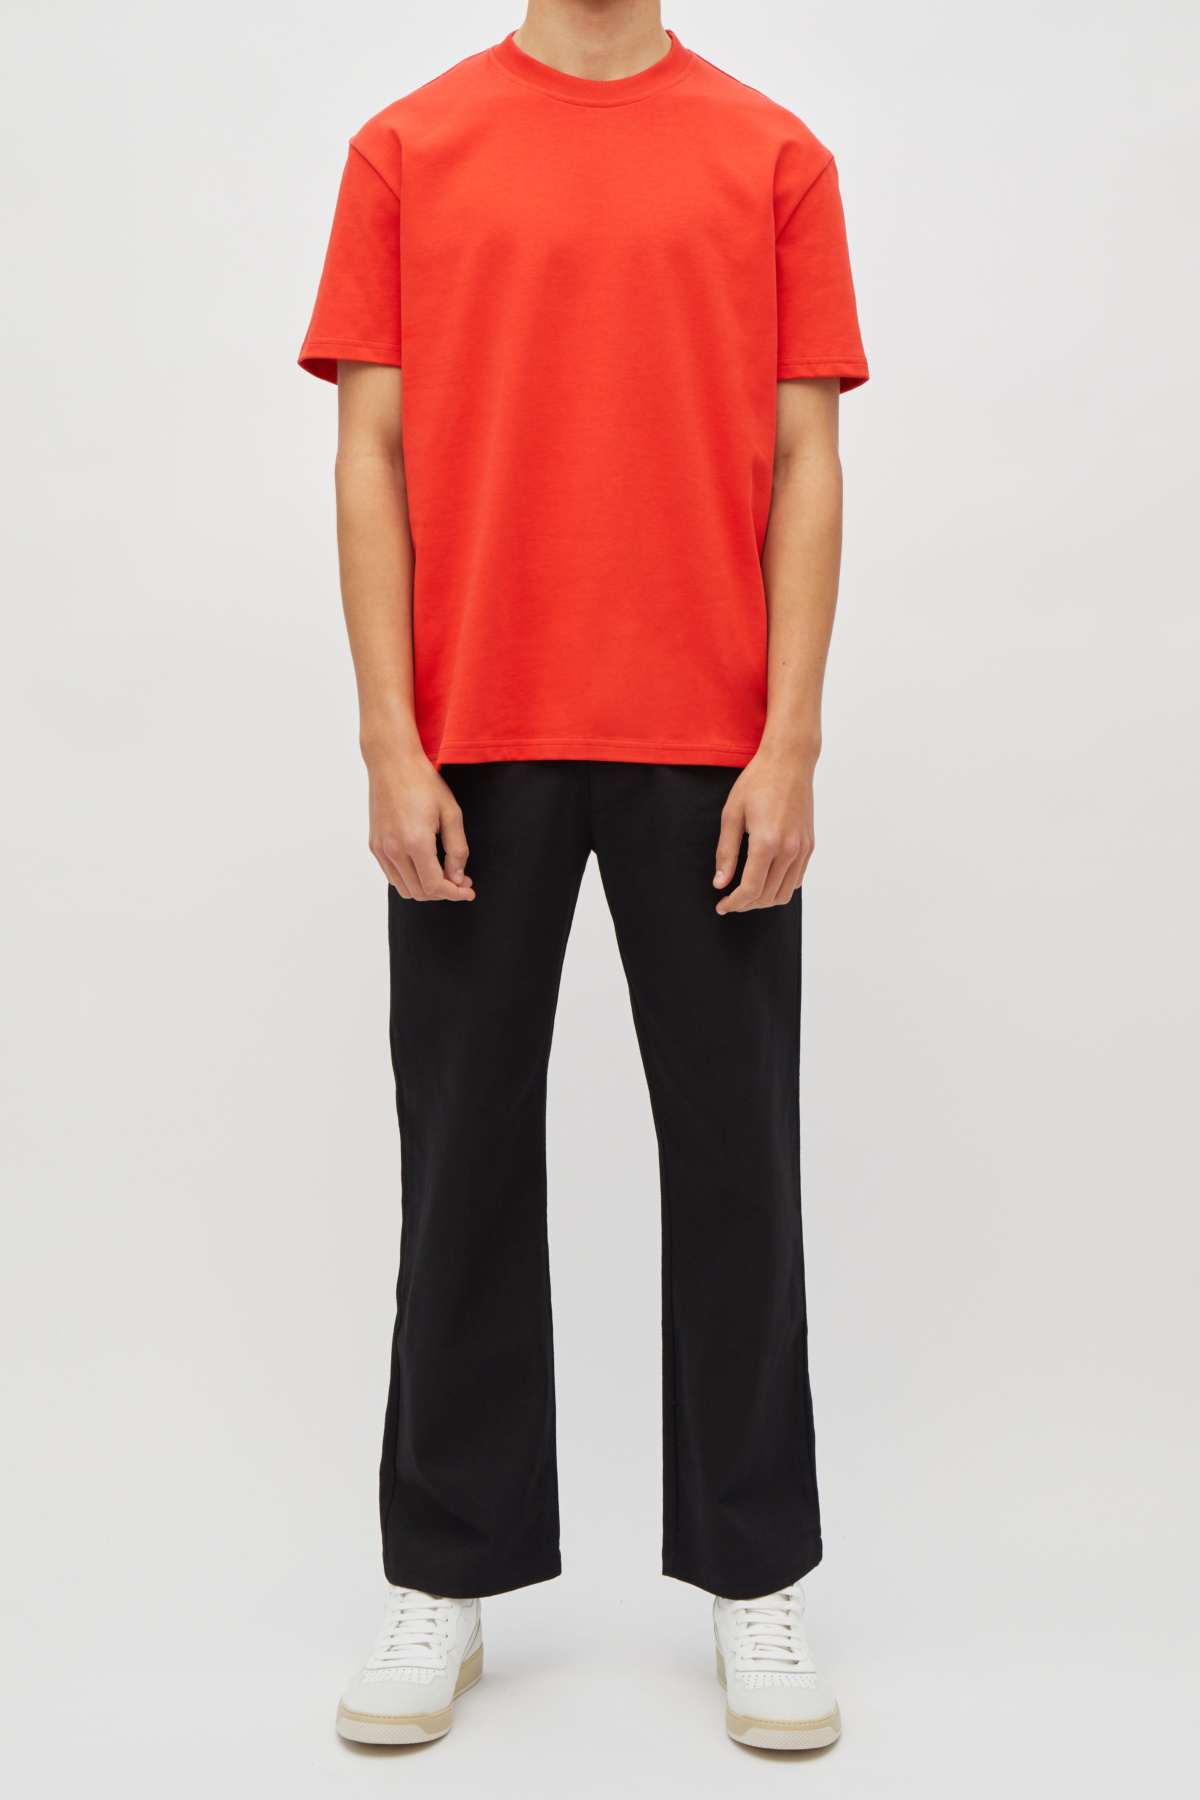 espace rouge Unisex Heavyweight T-Shirt 443016